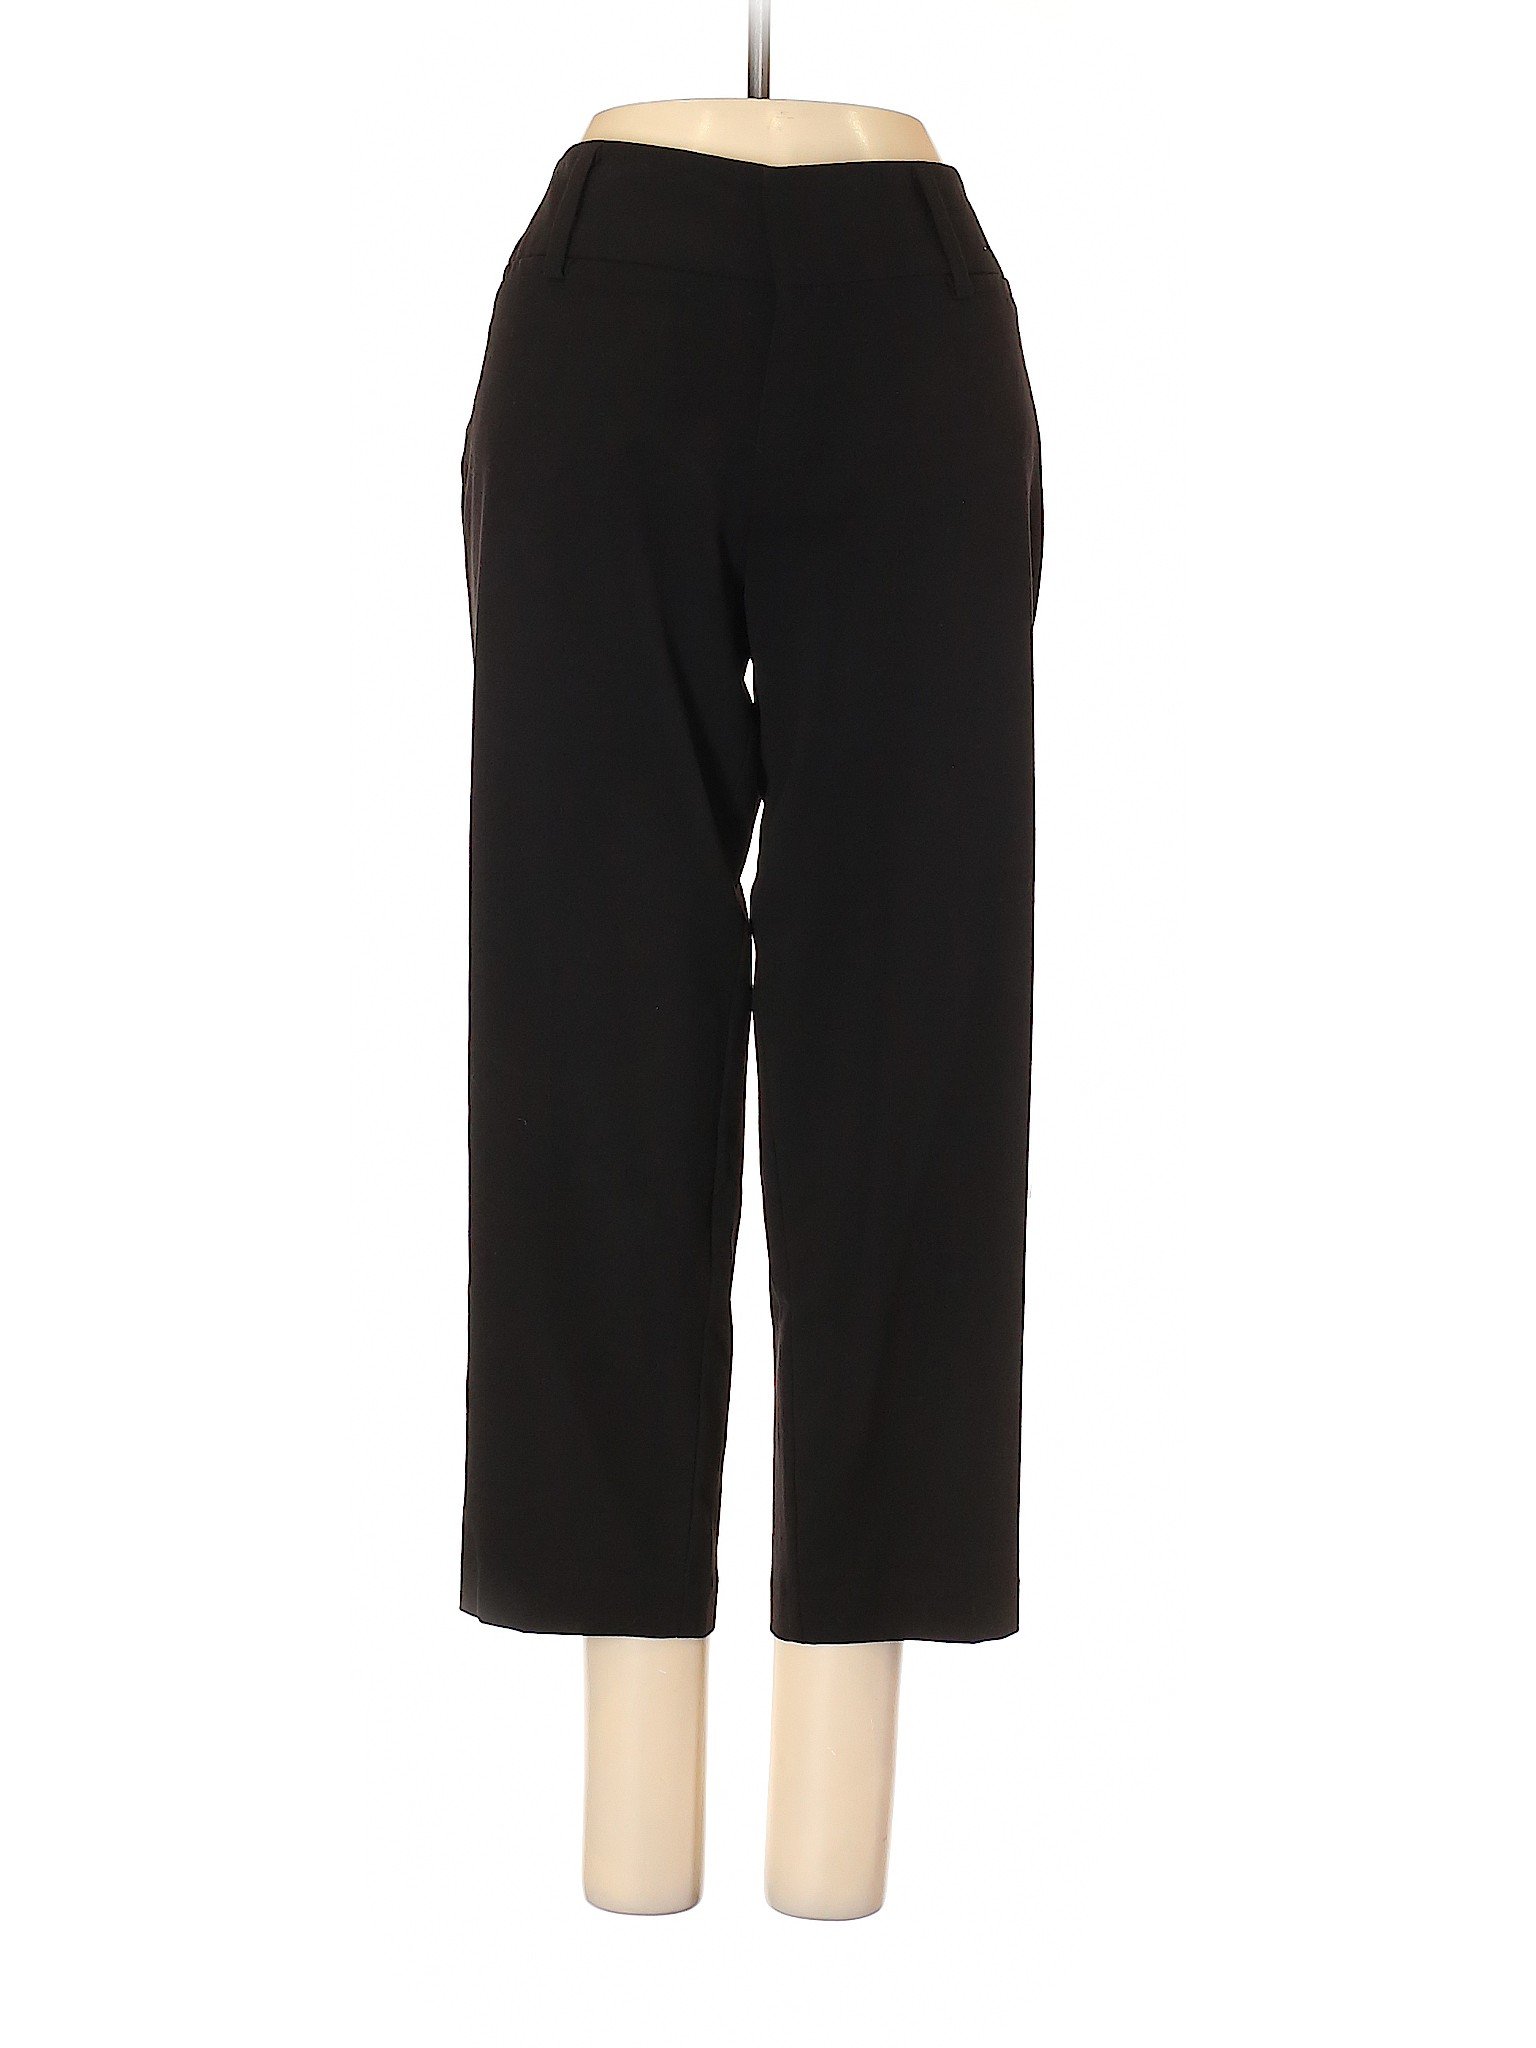 AB Studio Women Black Dress Pants 4 | eBay